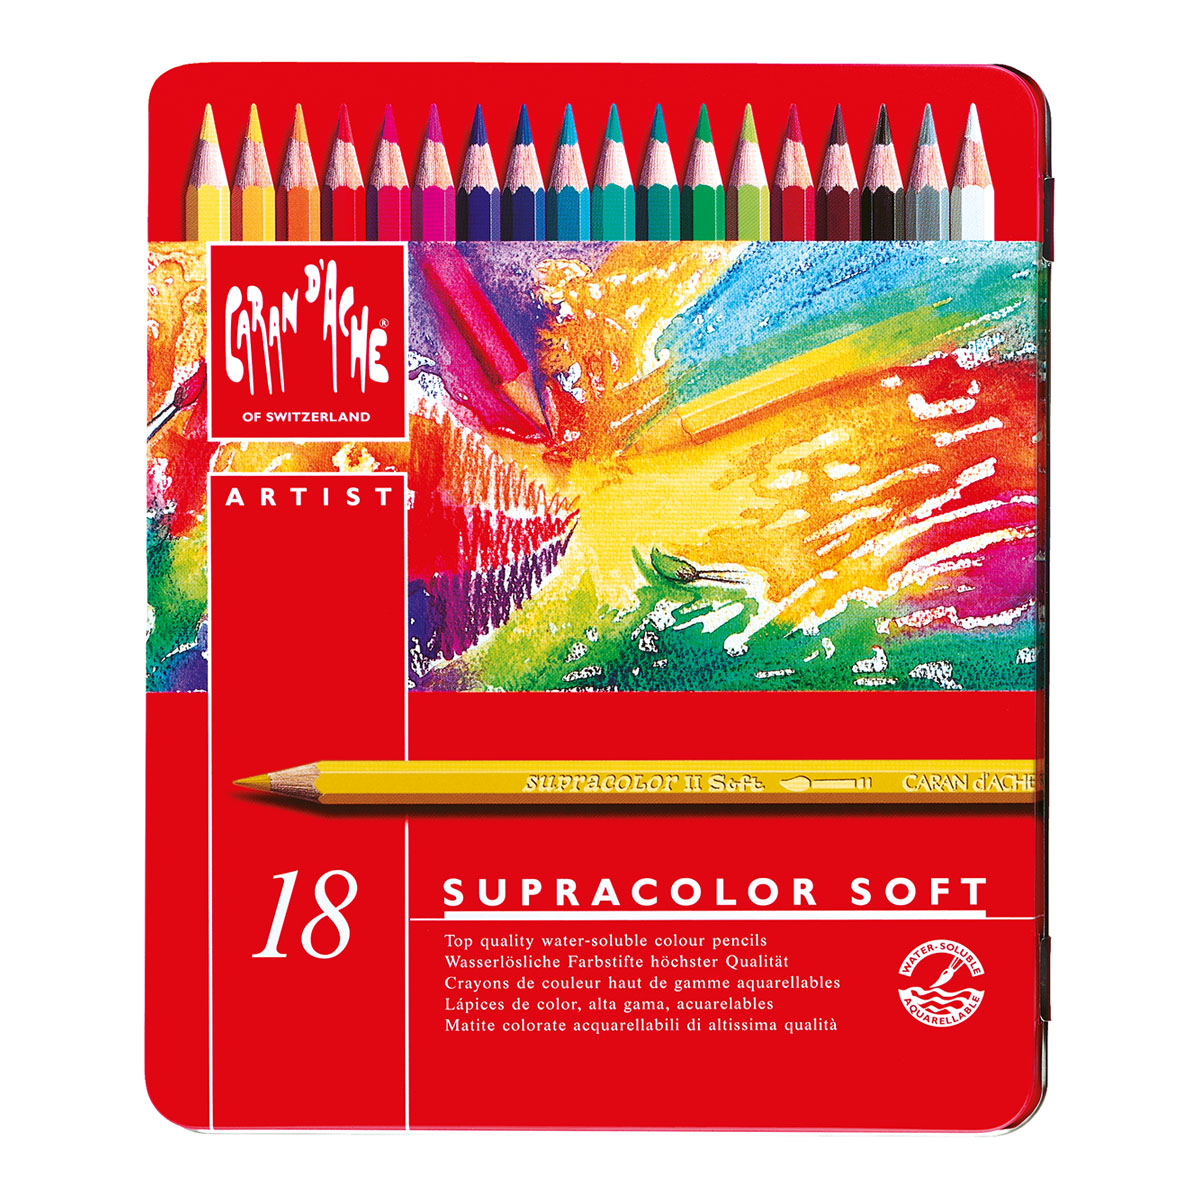 Caran d'Ache Supracolor Soft Aquarelle Coloured Pencils 18 Set